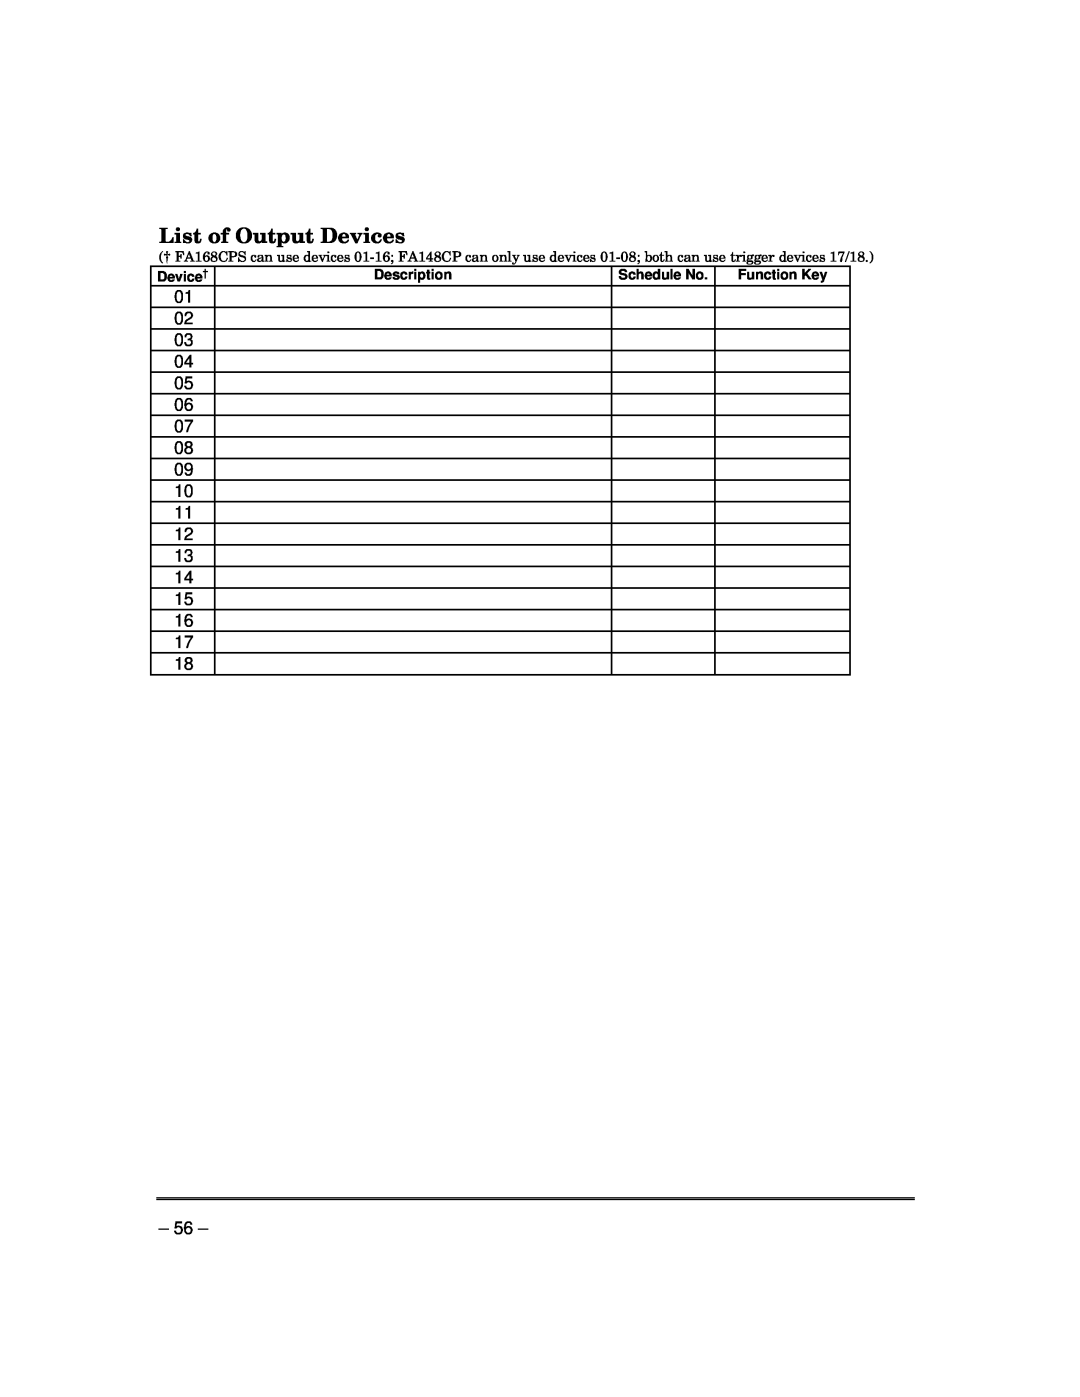 Garmin FA168CPS manual List of Output Devices, Device†, Description, Schedule No, Function Key 